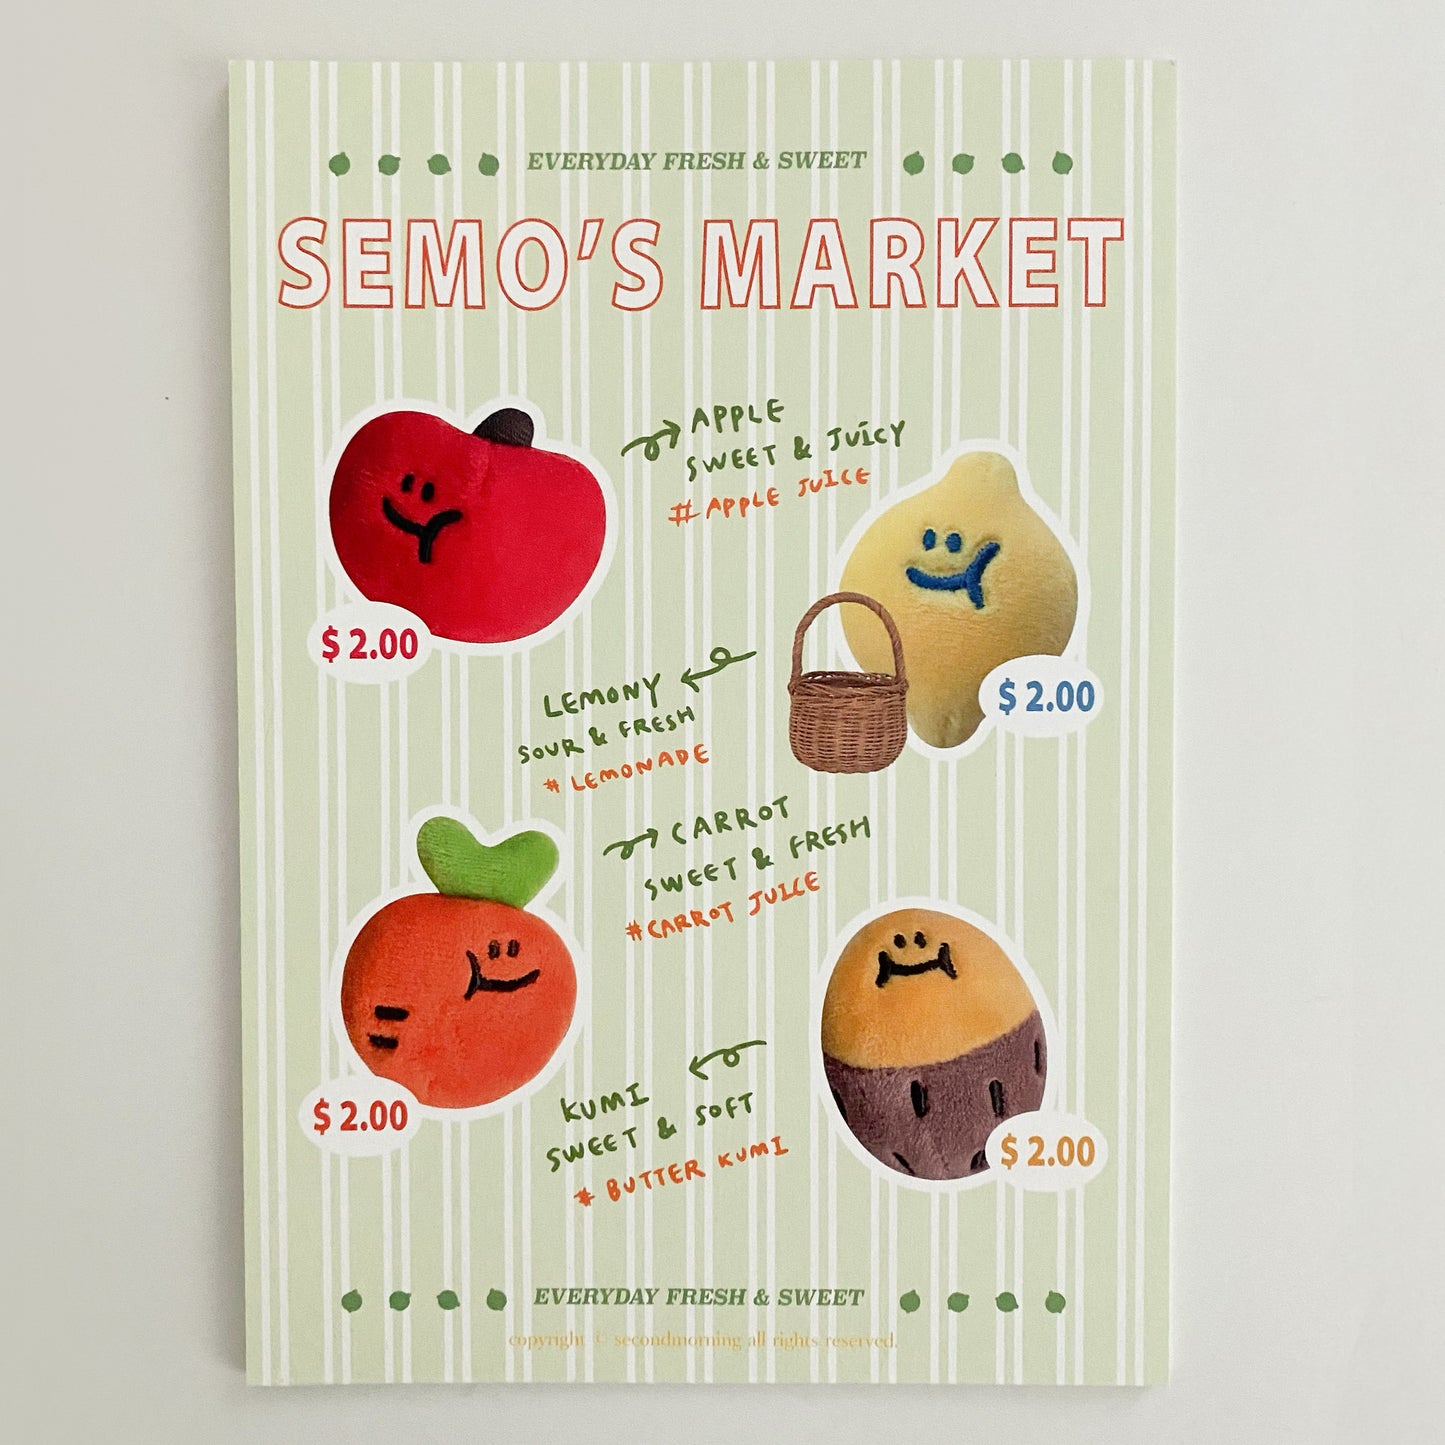 SECOND MORNING Semo Market Mini Poster